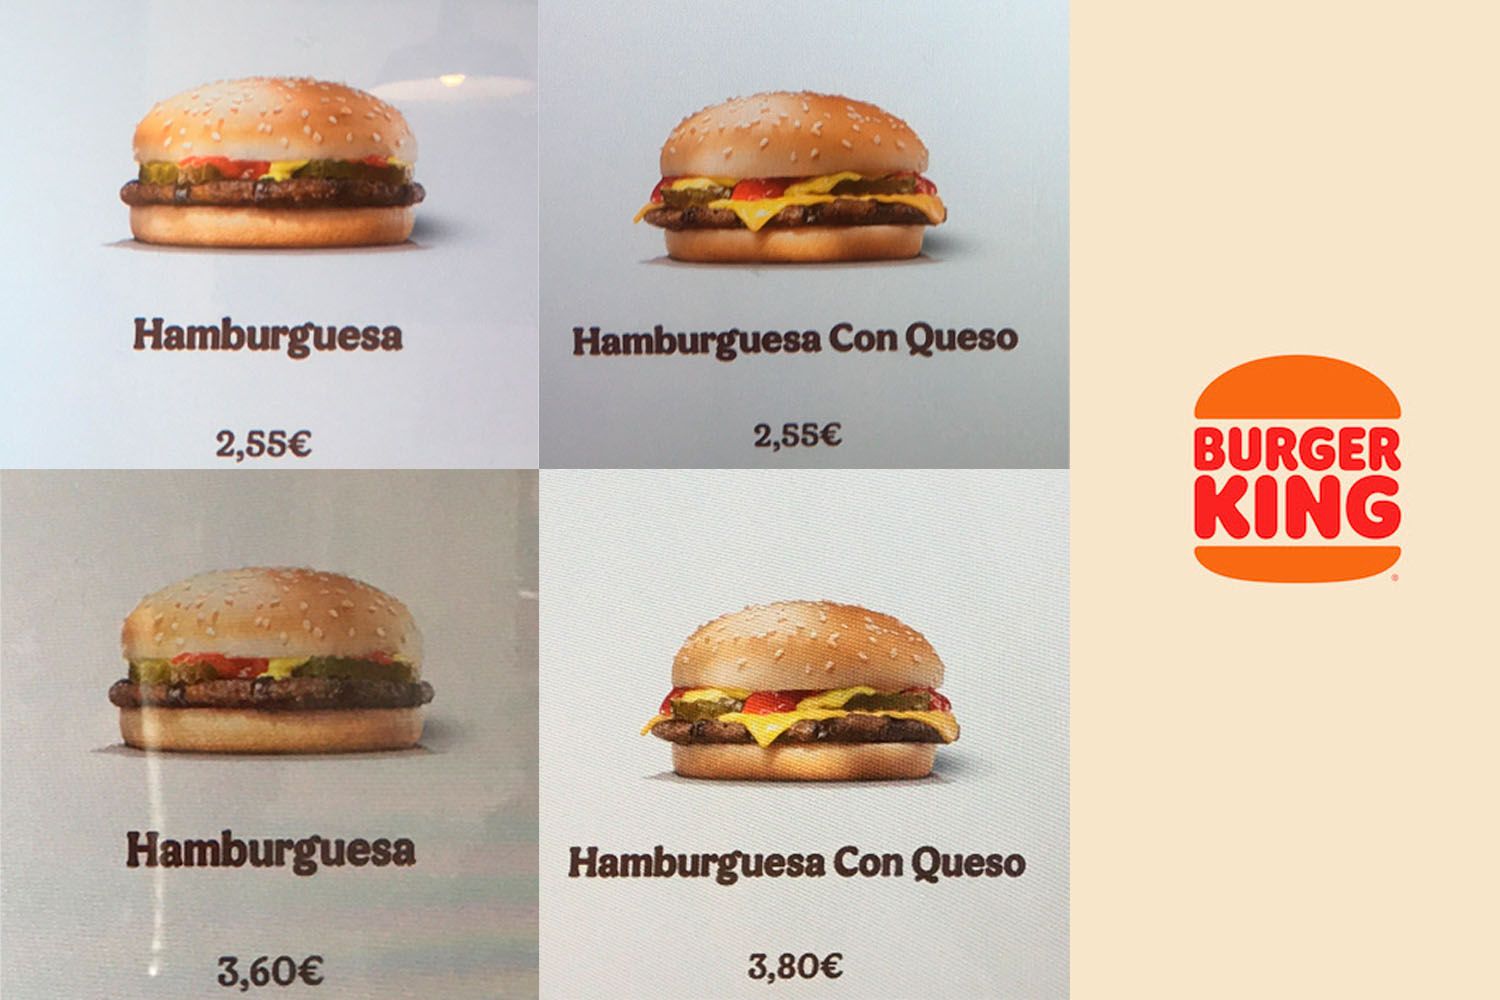 Pay almost double for the same hamburger at Burger King/CG